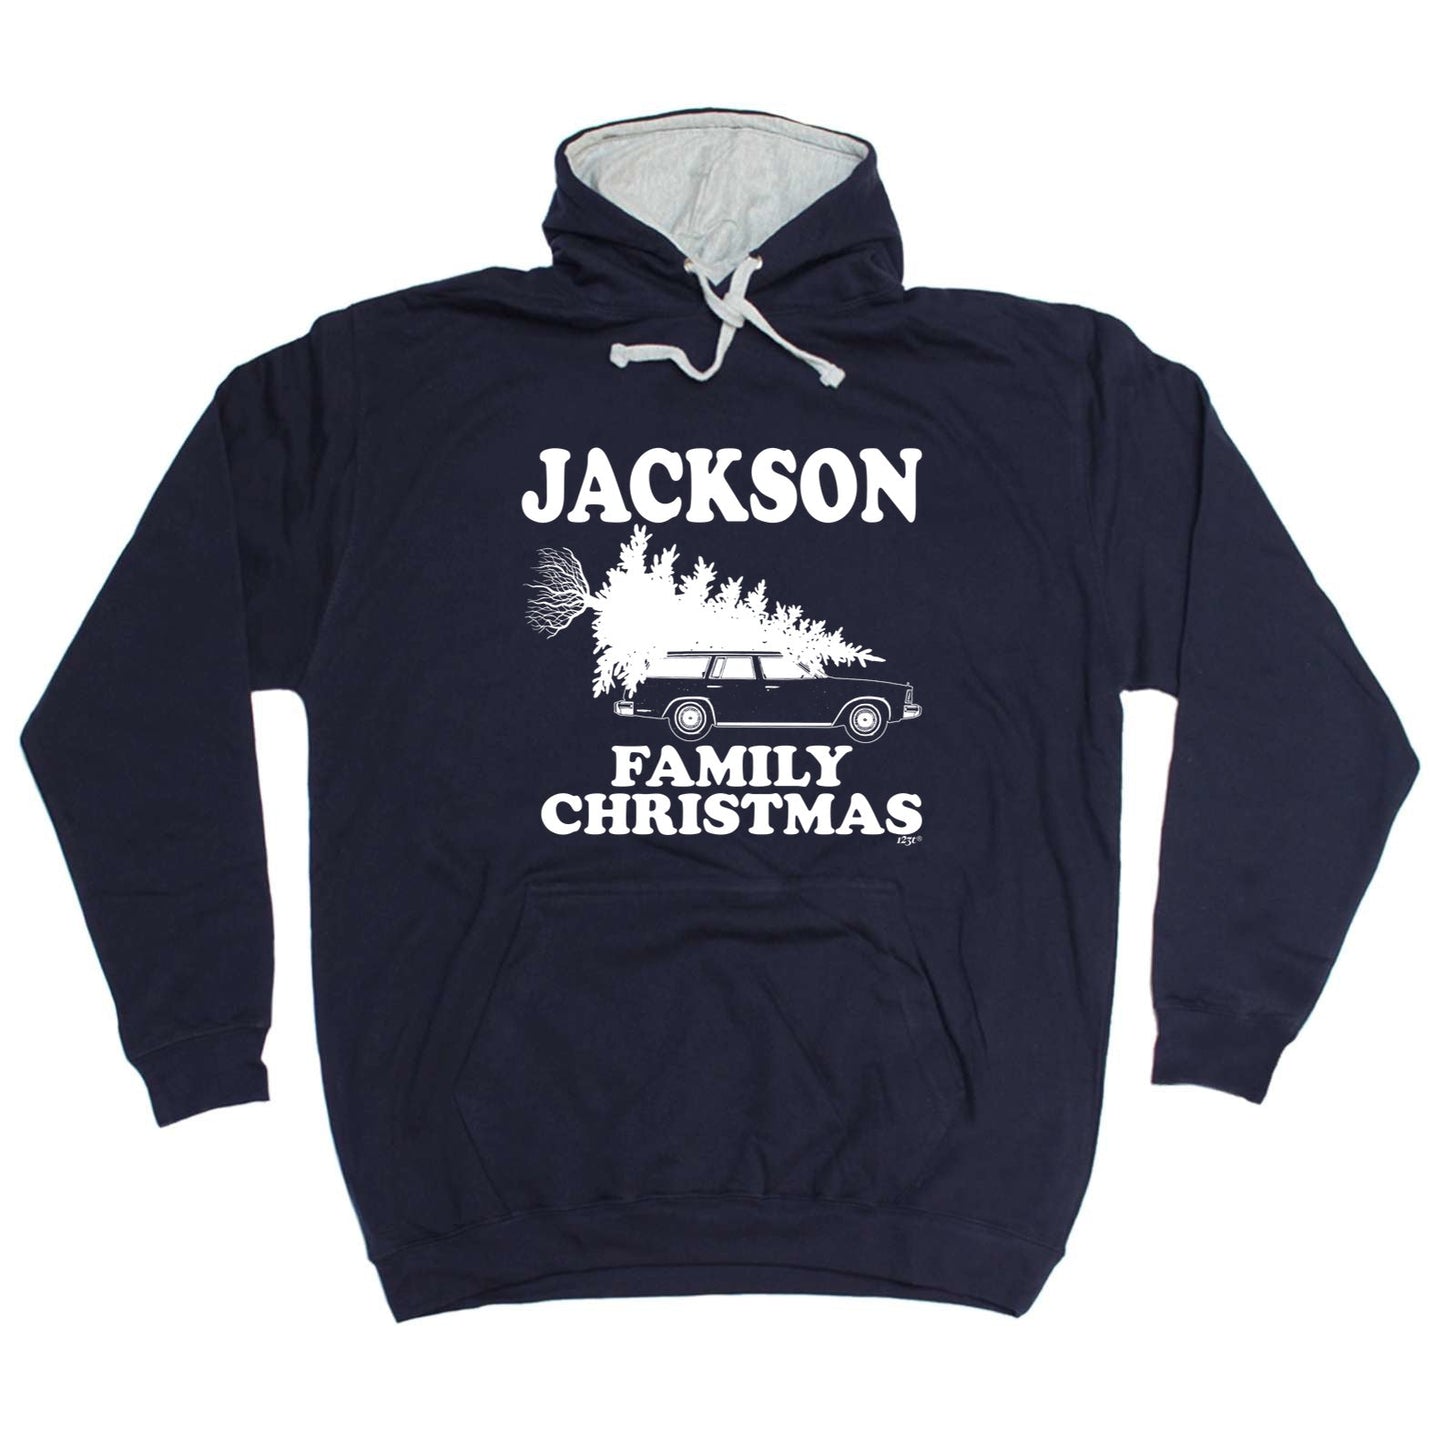 Family Christmas Jackson - Xmas Novelty Hoodies Hoodie